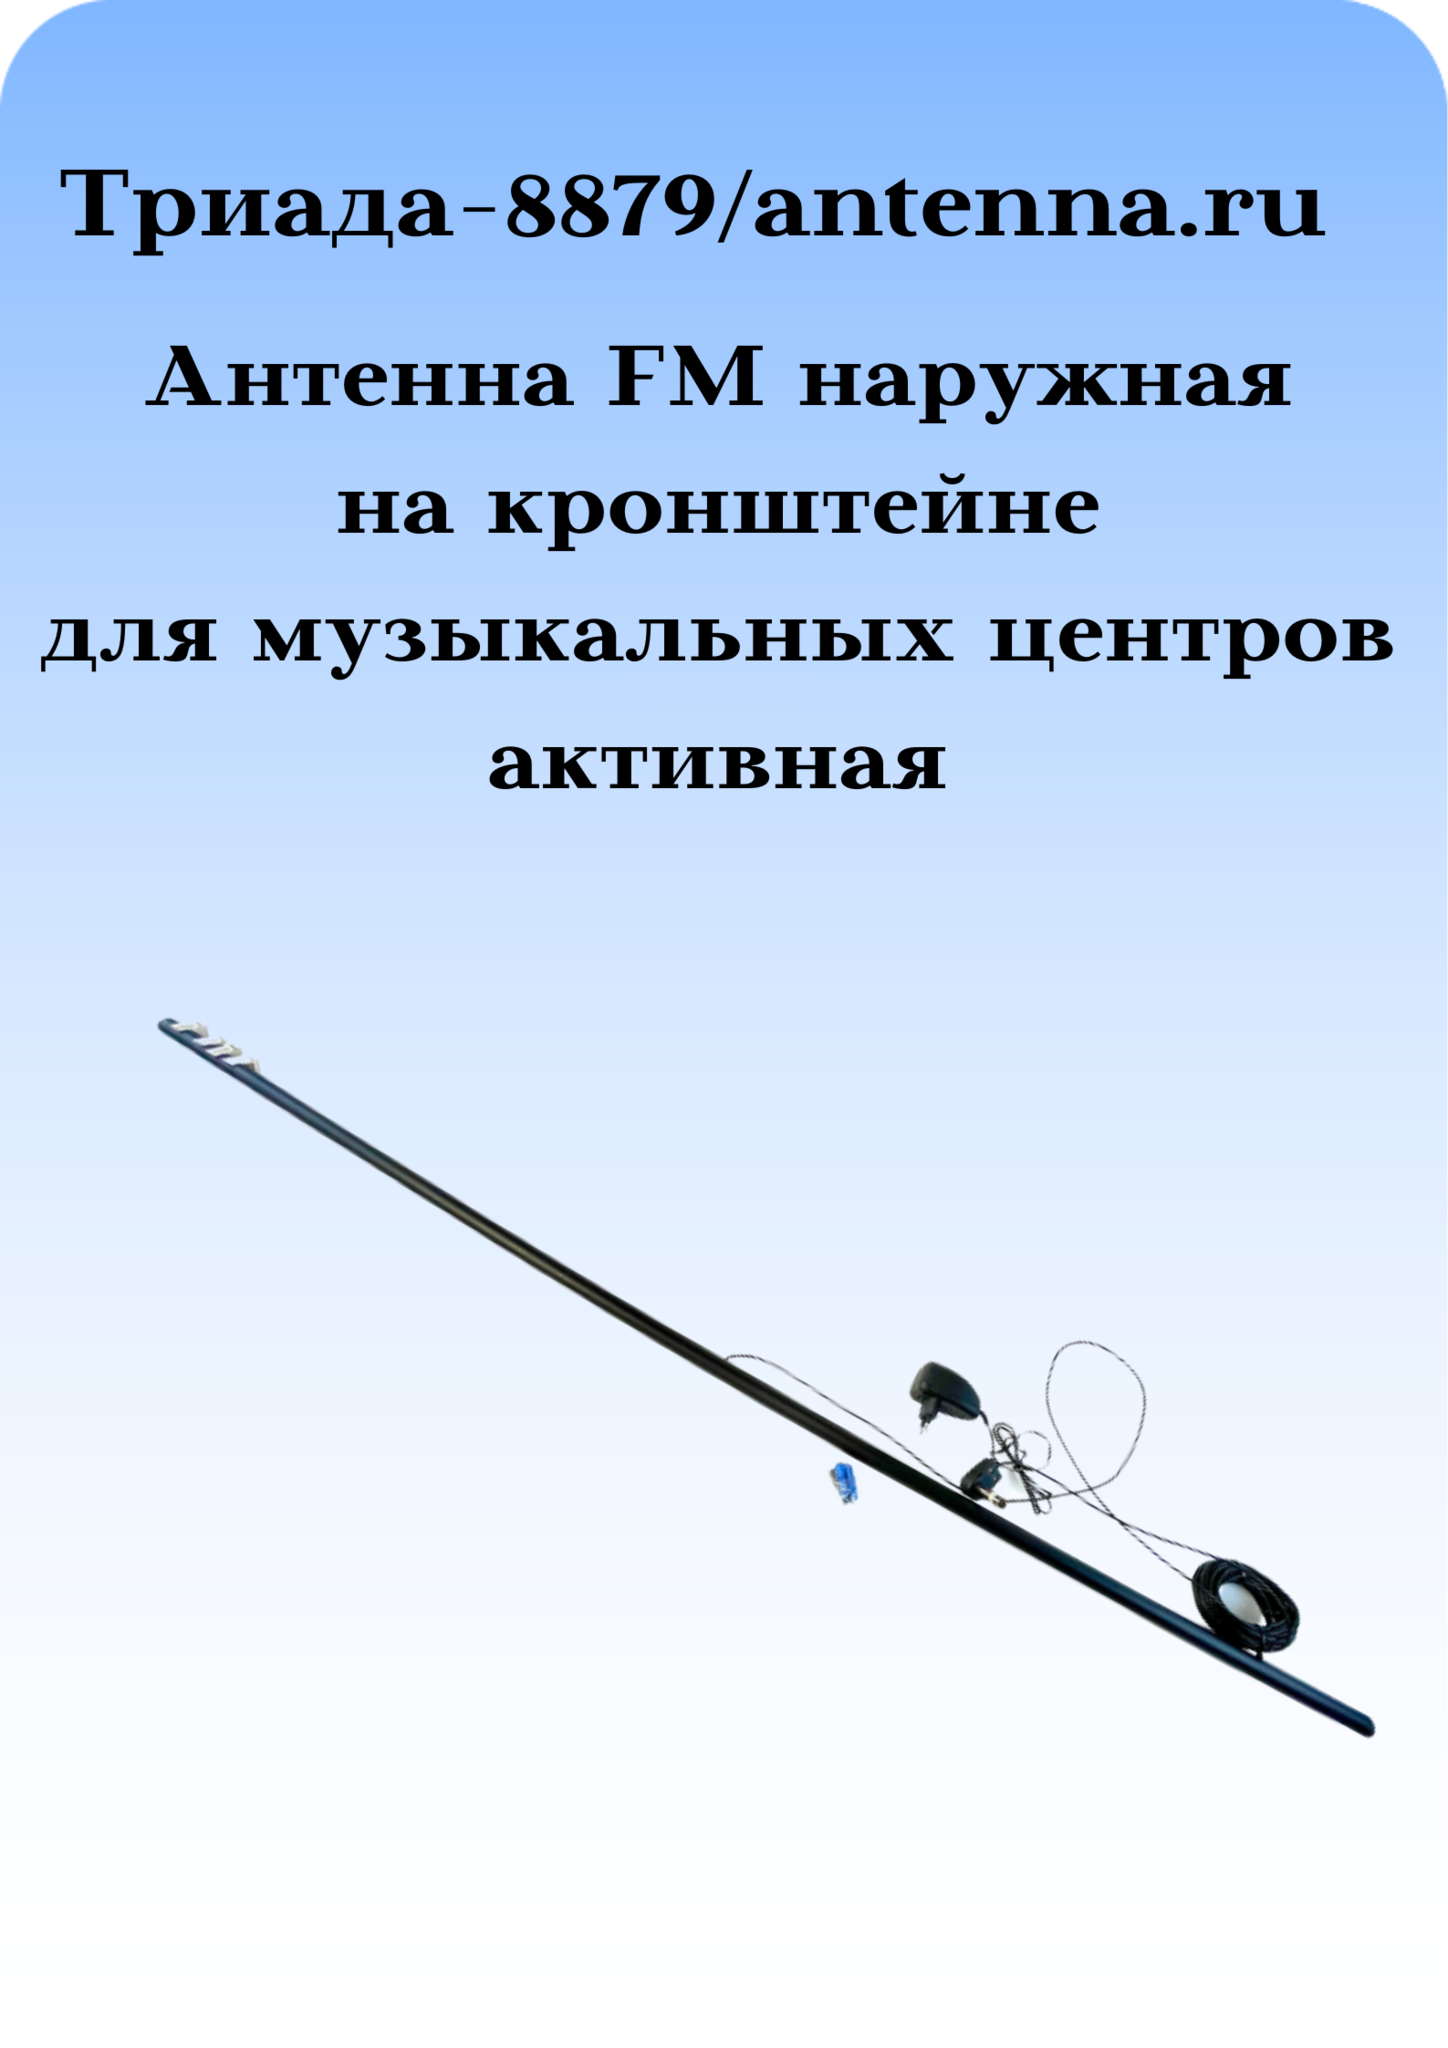 Антенны FM-вещания